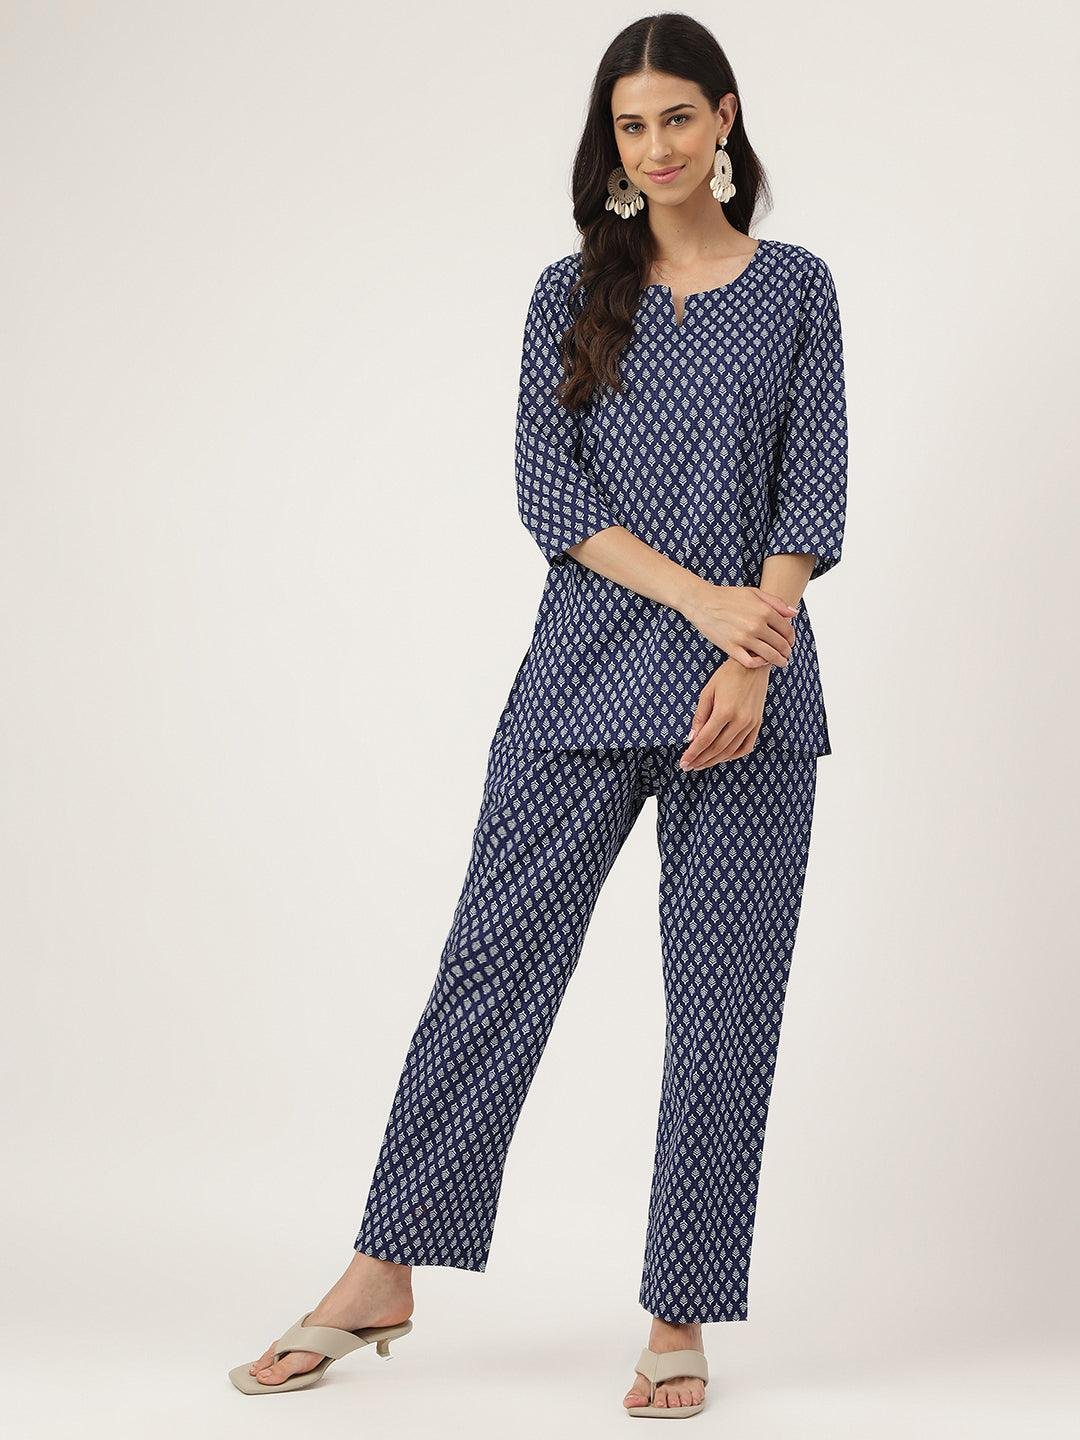 Women's 2 Piece Pajamas Sets Leopard Print Pijama Ice Silk Pyjama Female  Sleepwear Long Sleeve Shirt Trouser Homewear Loungewear